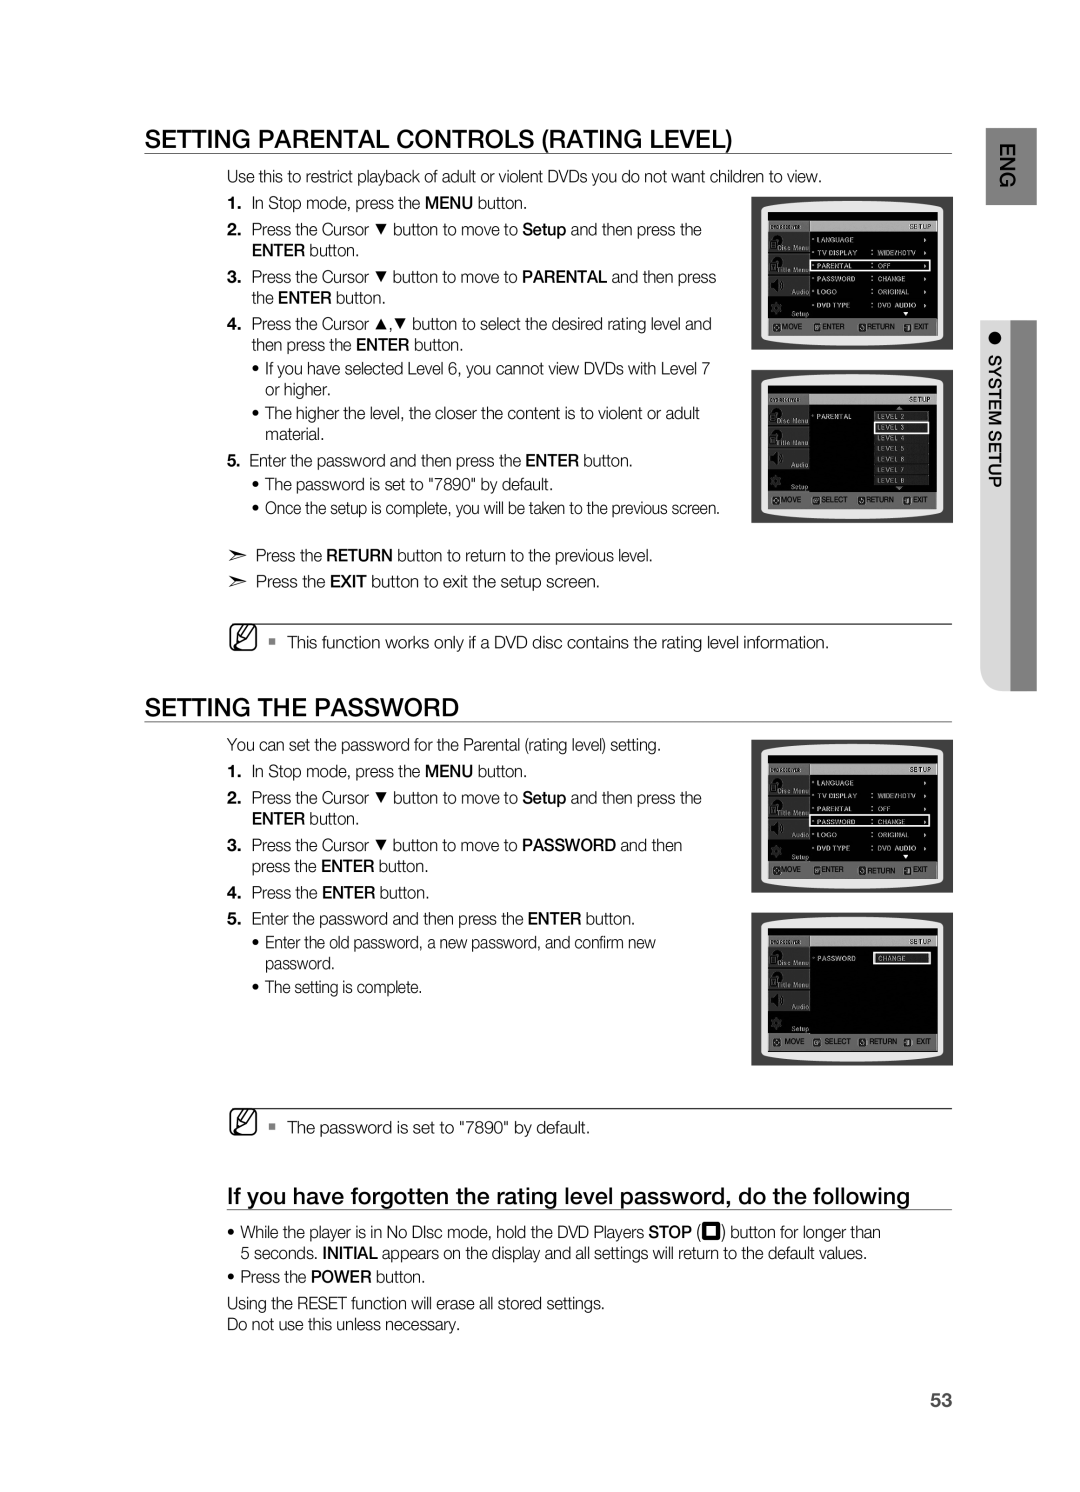 Samsung HT-Z310, HT-TZ312 manual Setting Parental Controls Rating Level, Setting the Password 